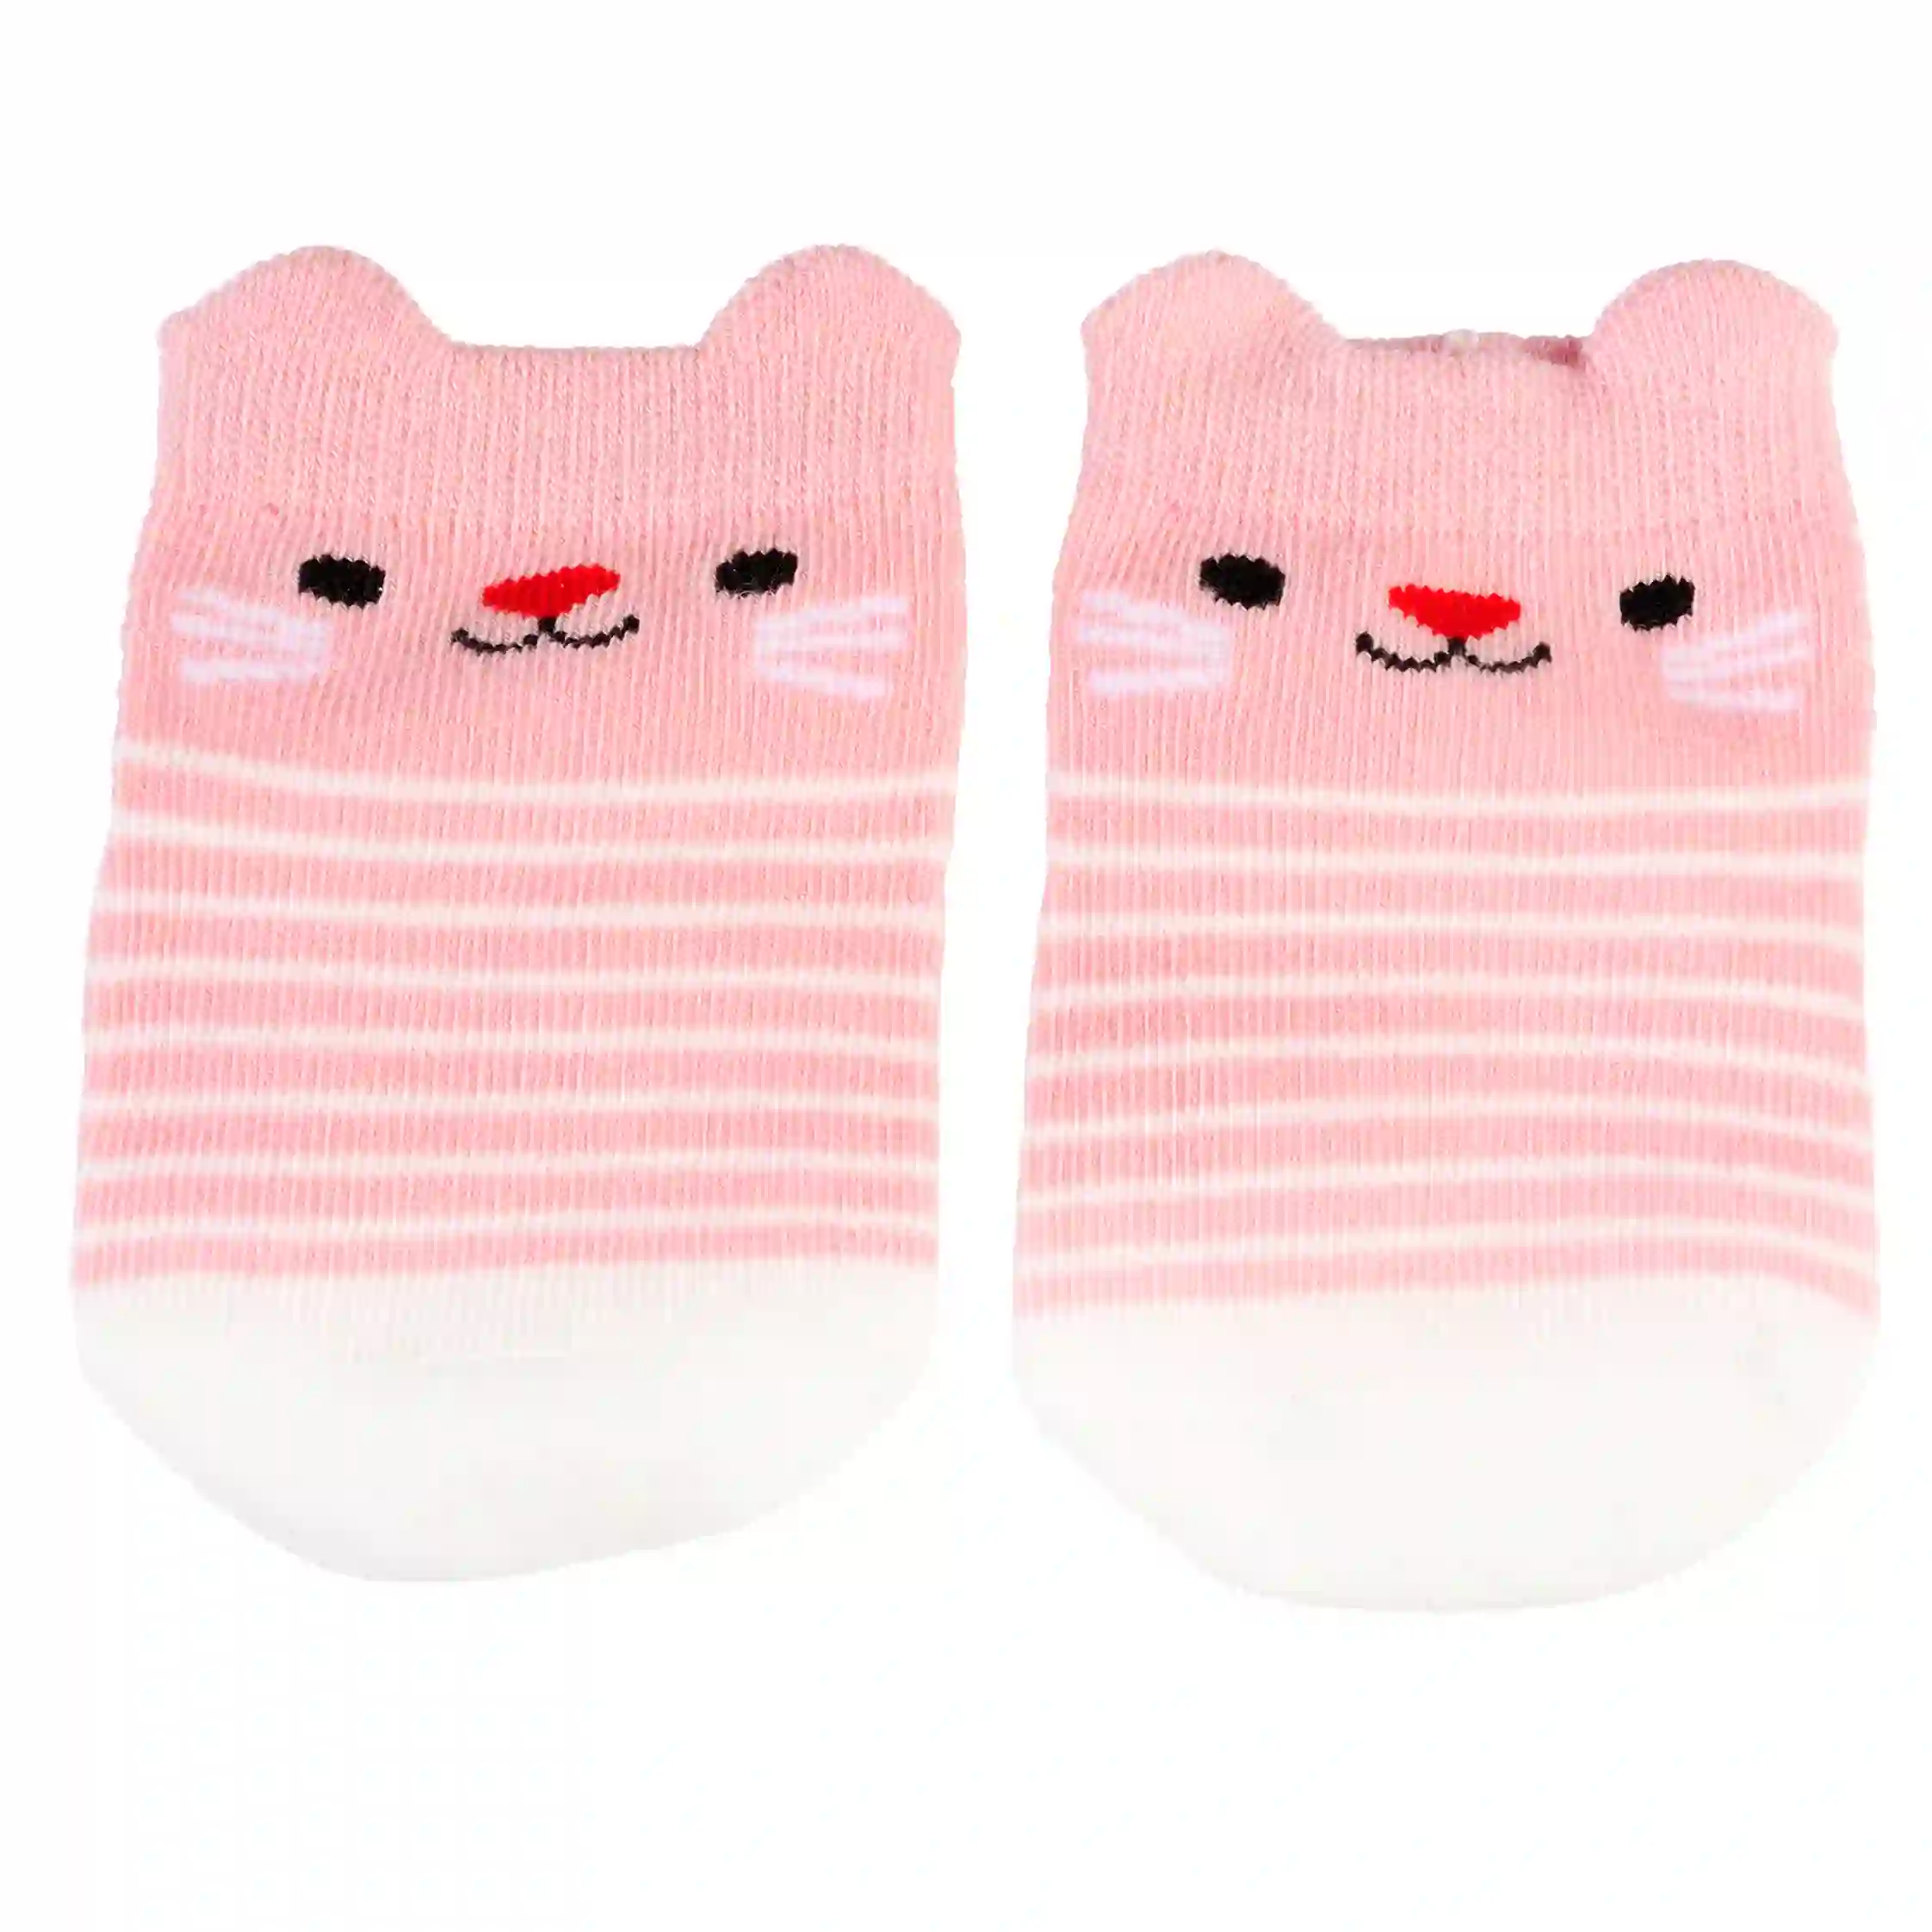 pair of baby socks - cookie the cat